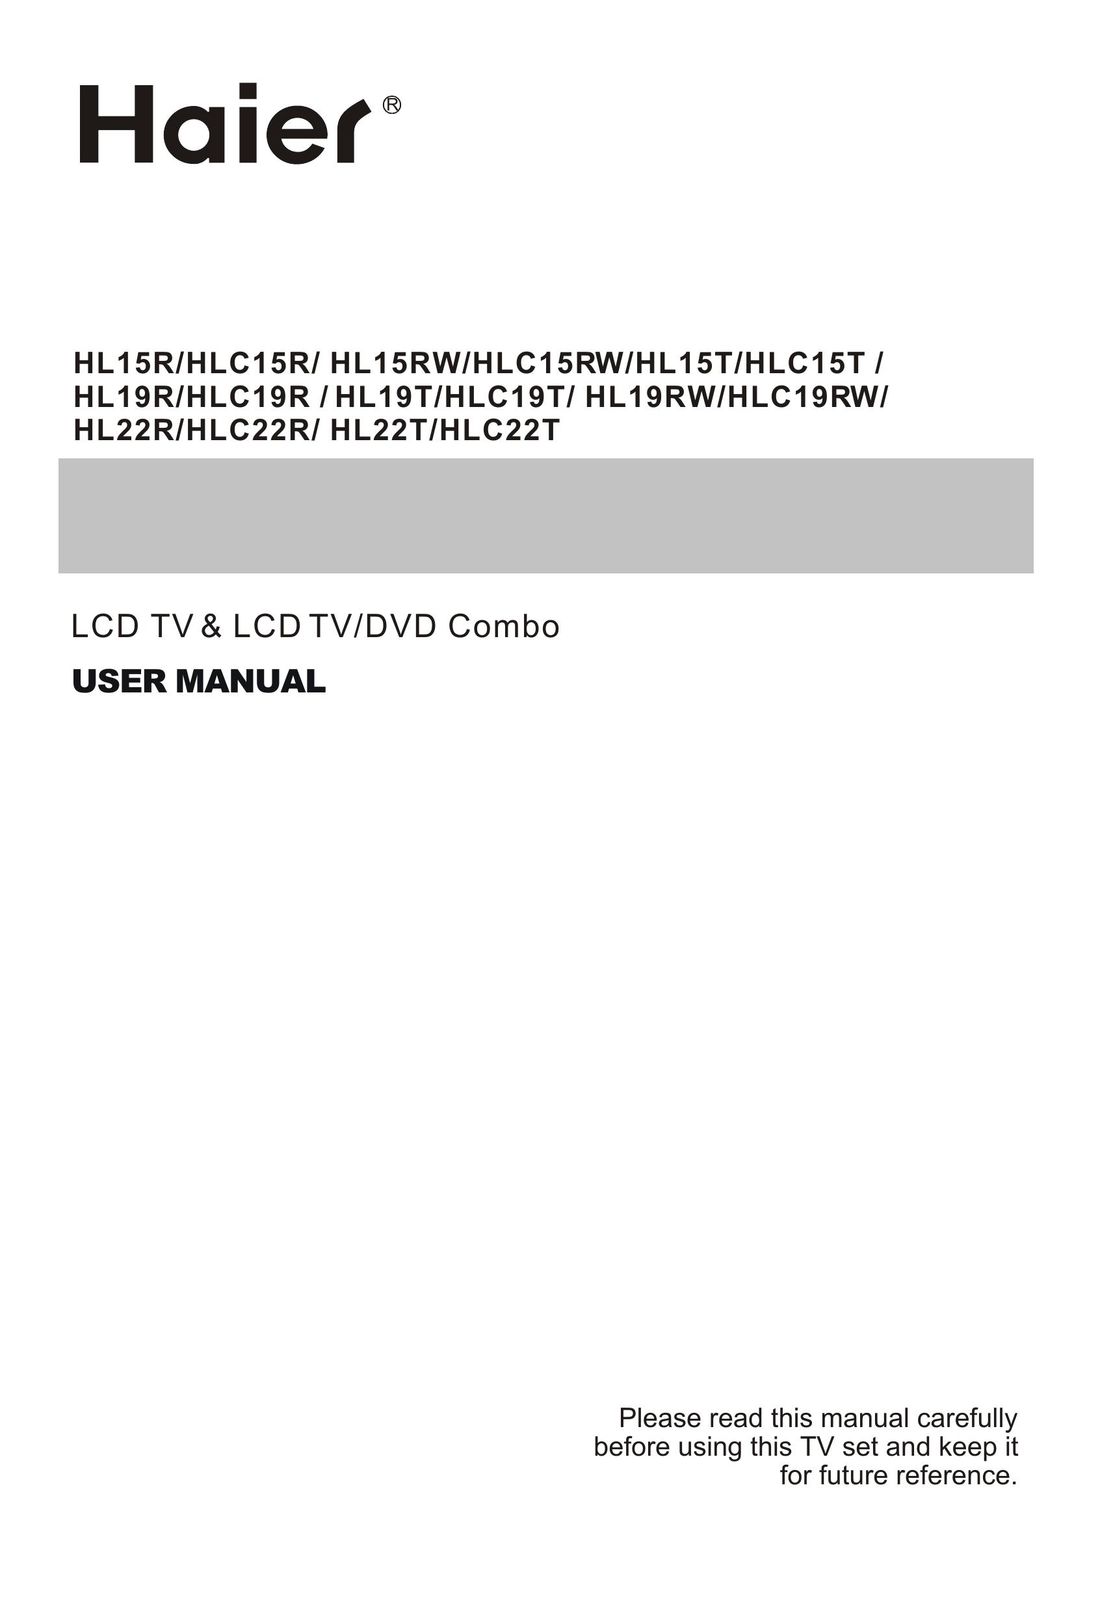 Haier HL15RW TV DVD Combo User Manual